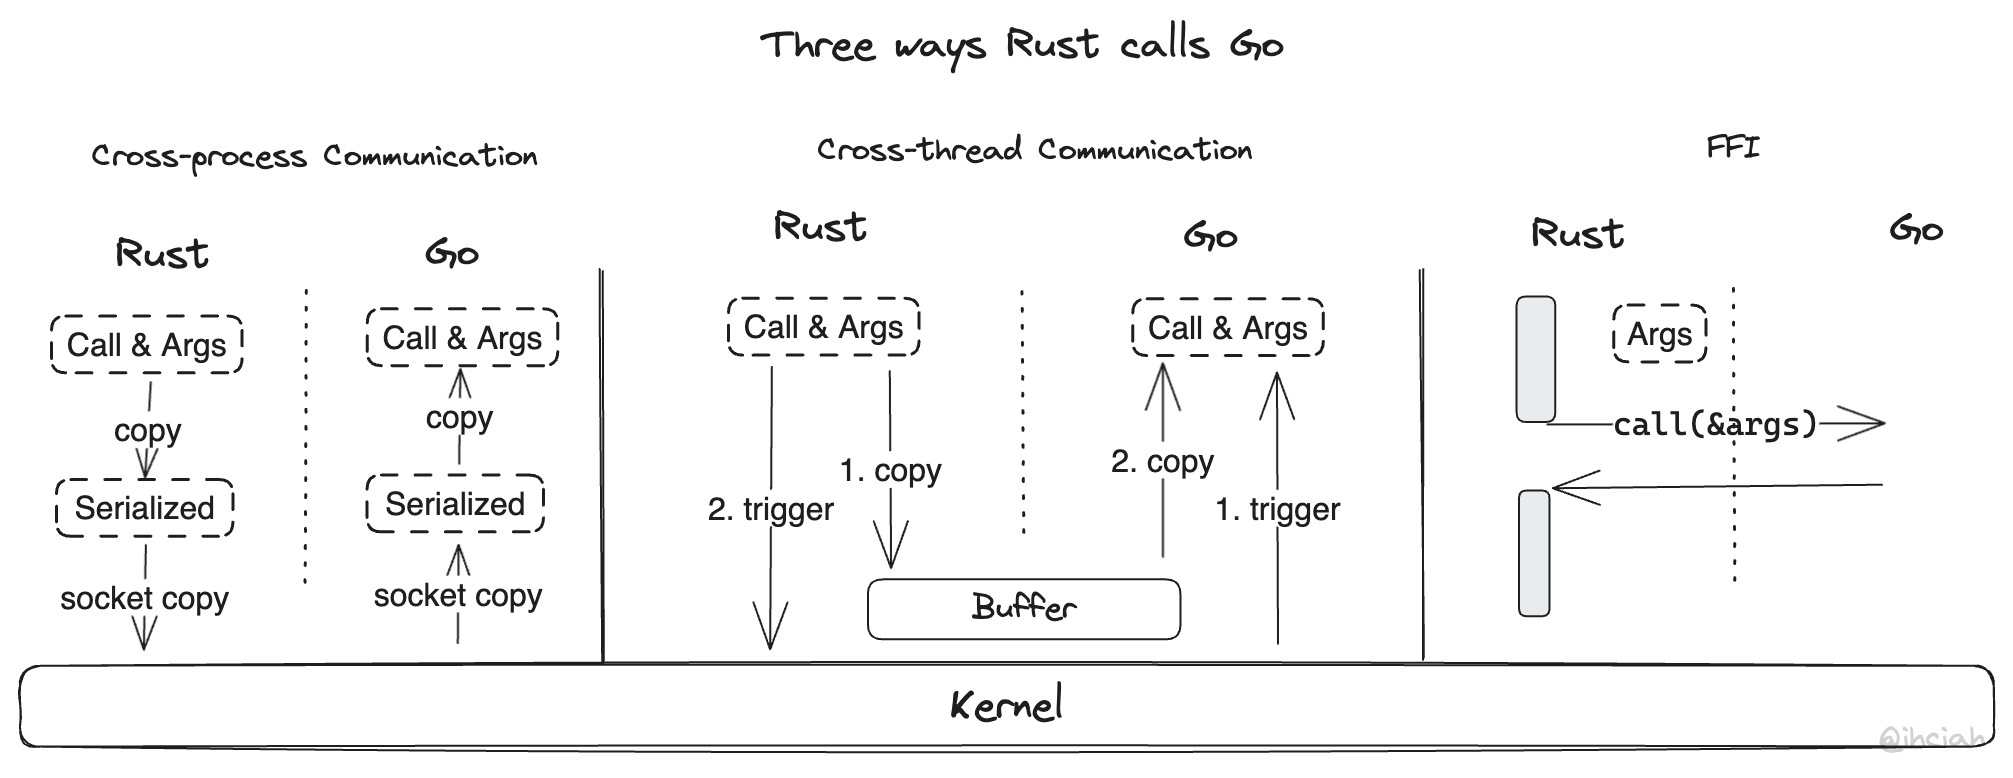 three ways rust calls go